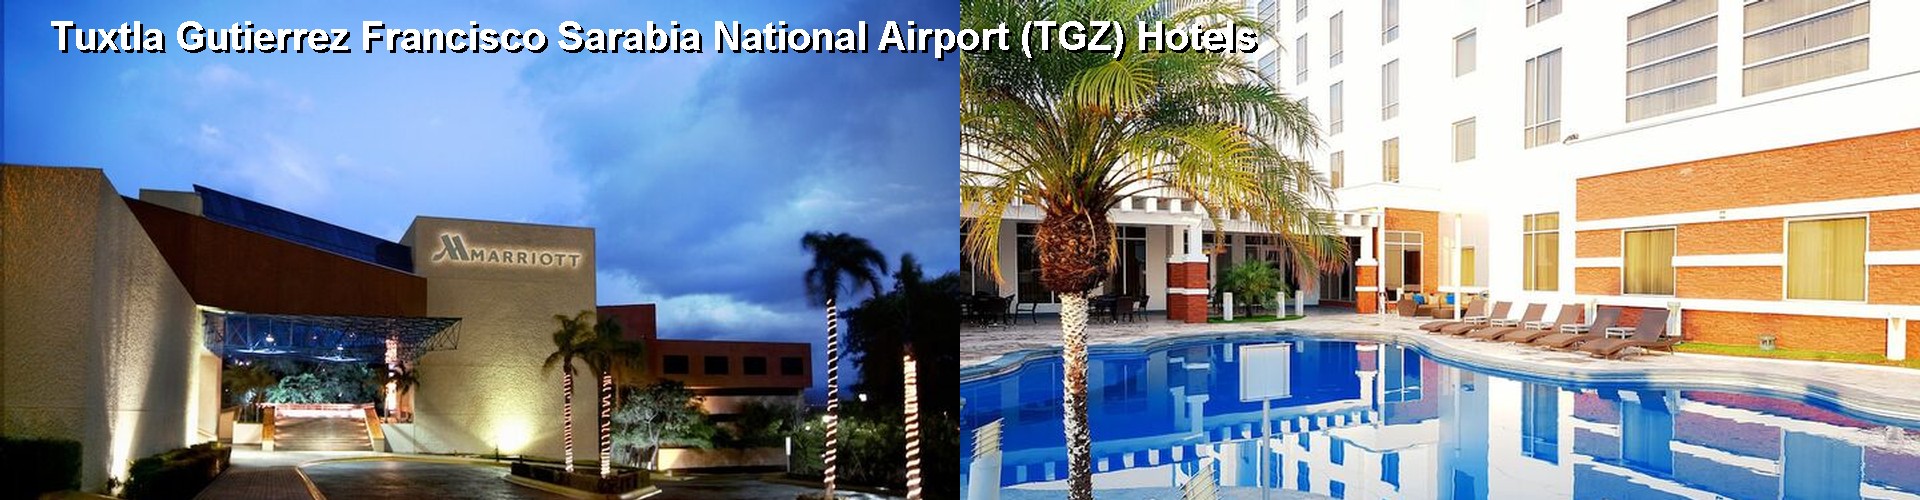 5 Best Hotels near Tuxtla Gutierrez Francisco Sarabia National Airport (TGZ)